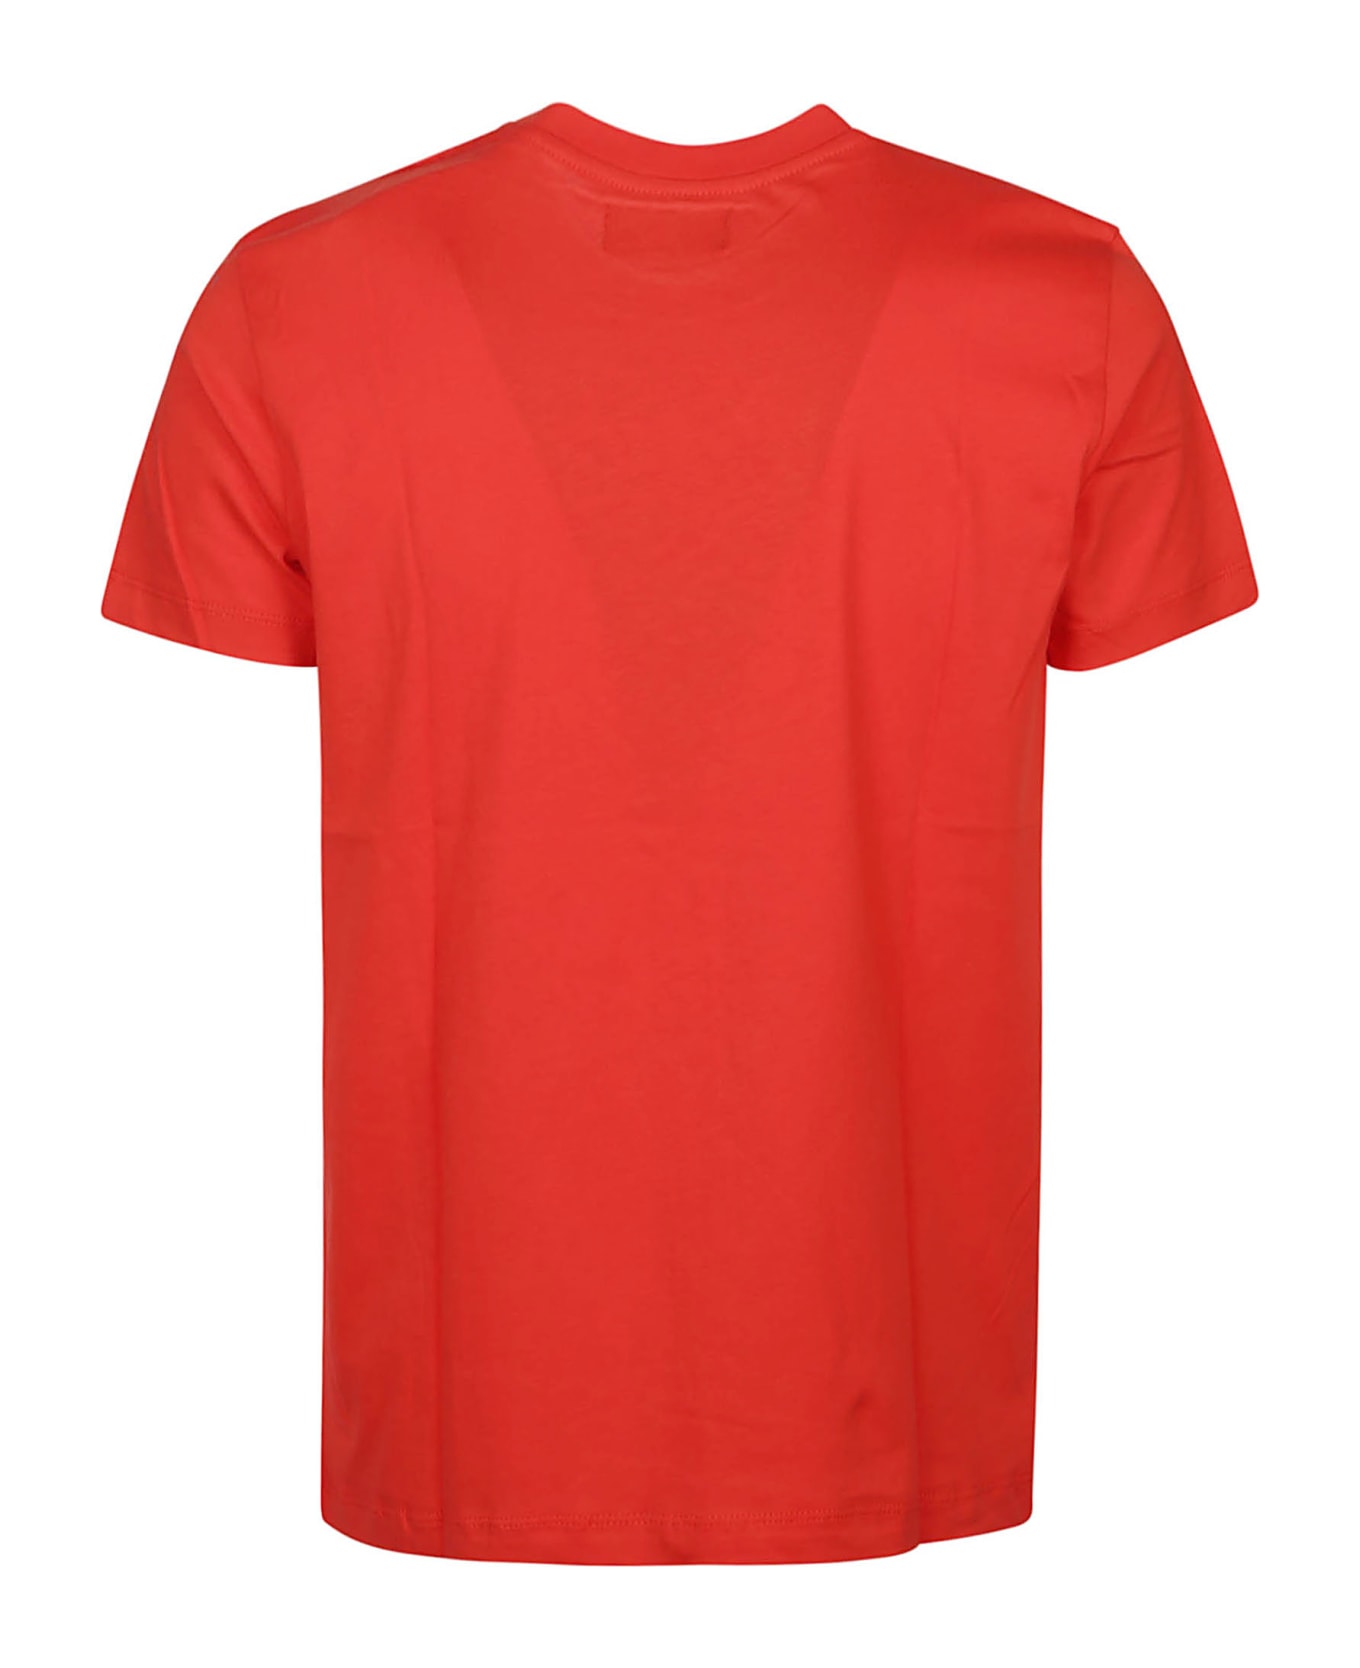 Vilebrequin Washed T-shirt - Rosso Brillante シャツ